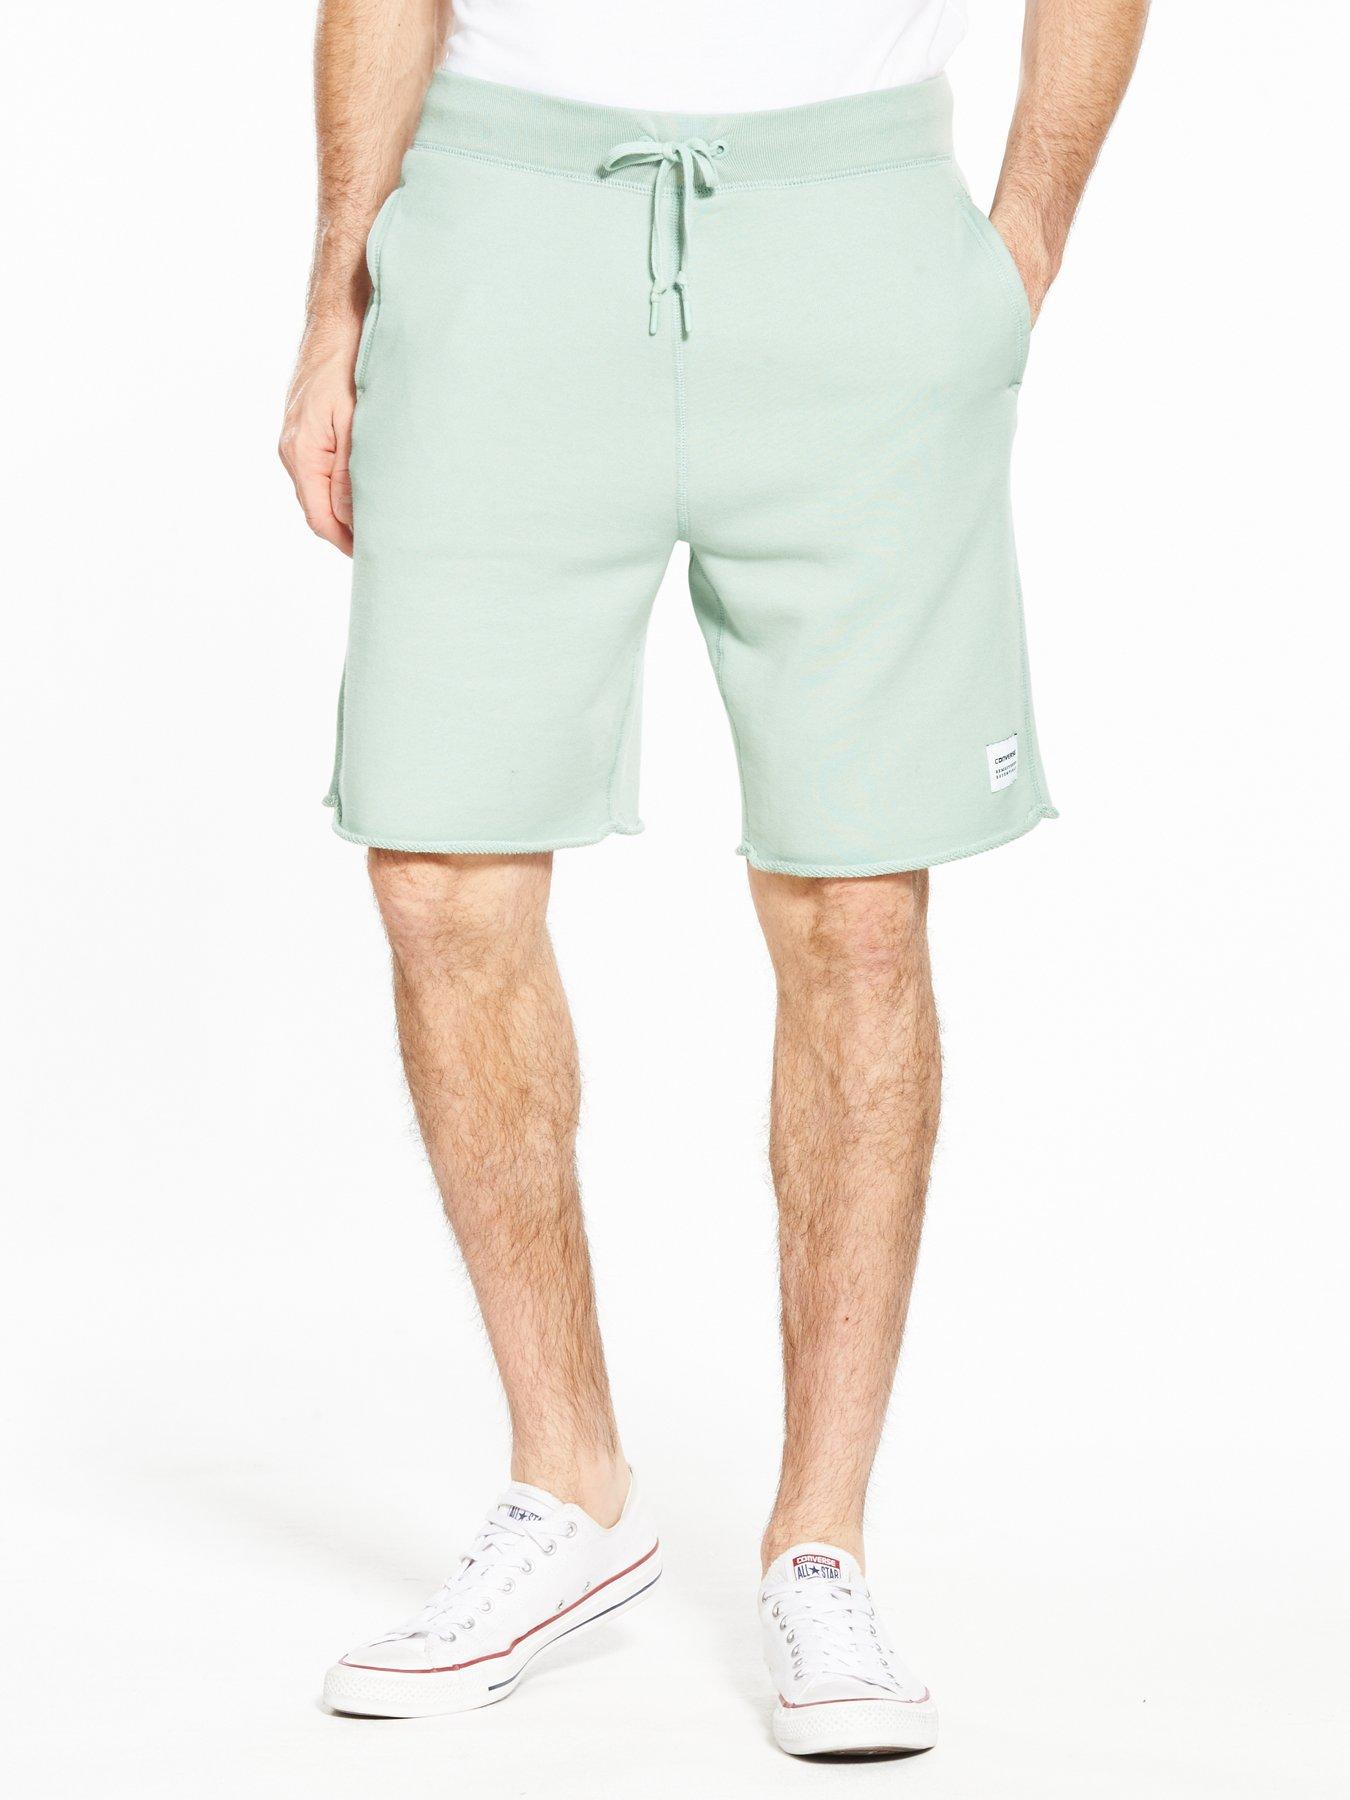 converse tracksuit shorts